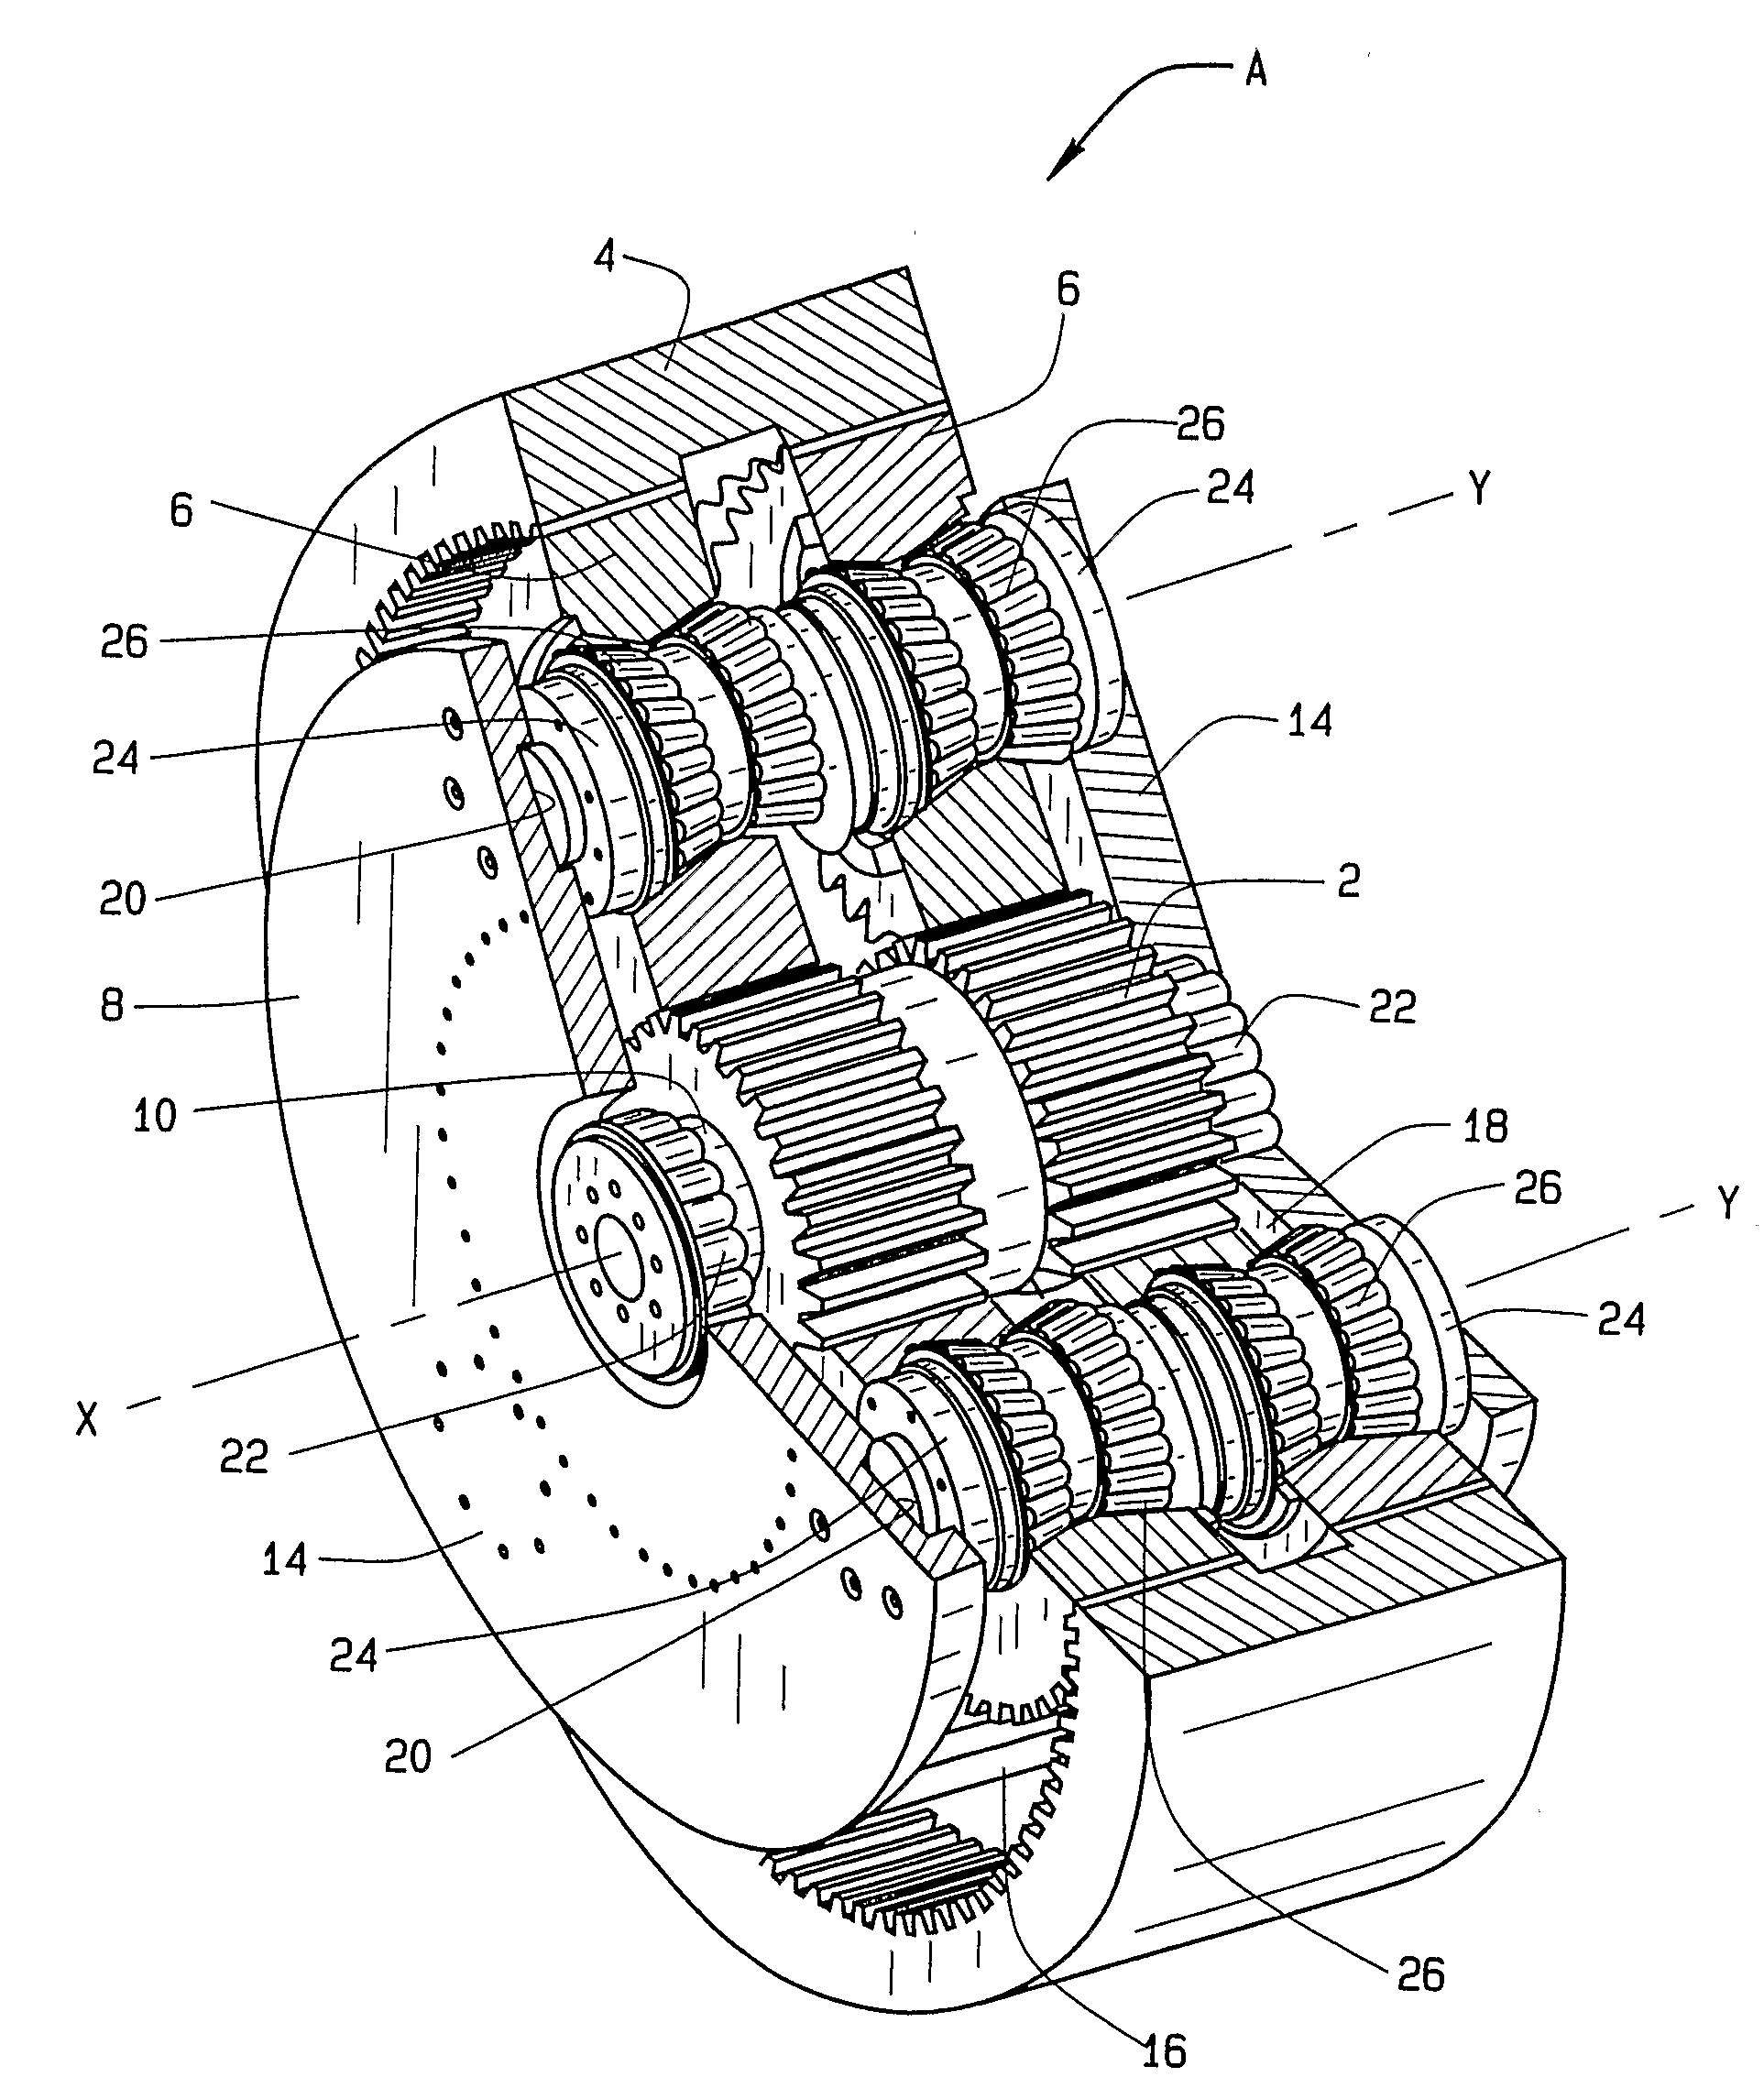 Epicyclic Gear System with Flexpins